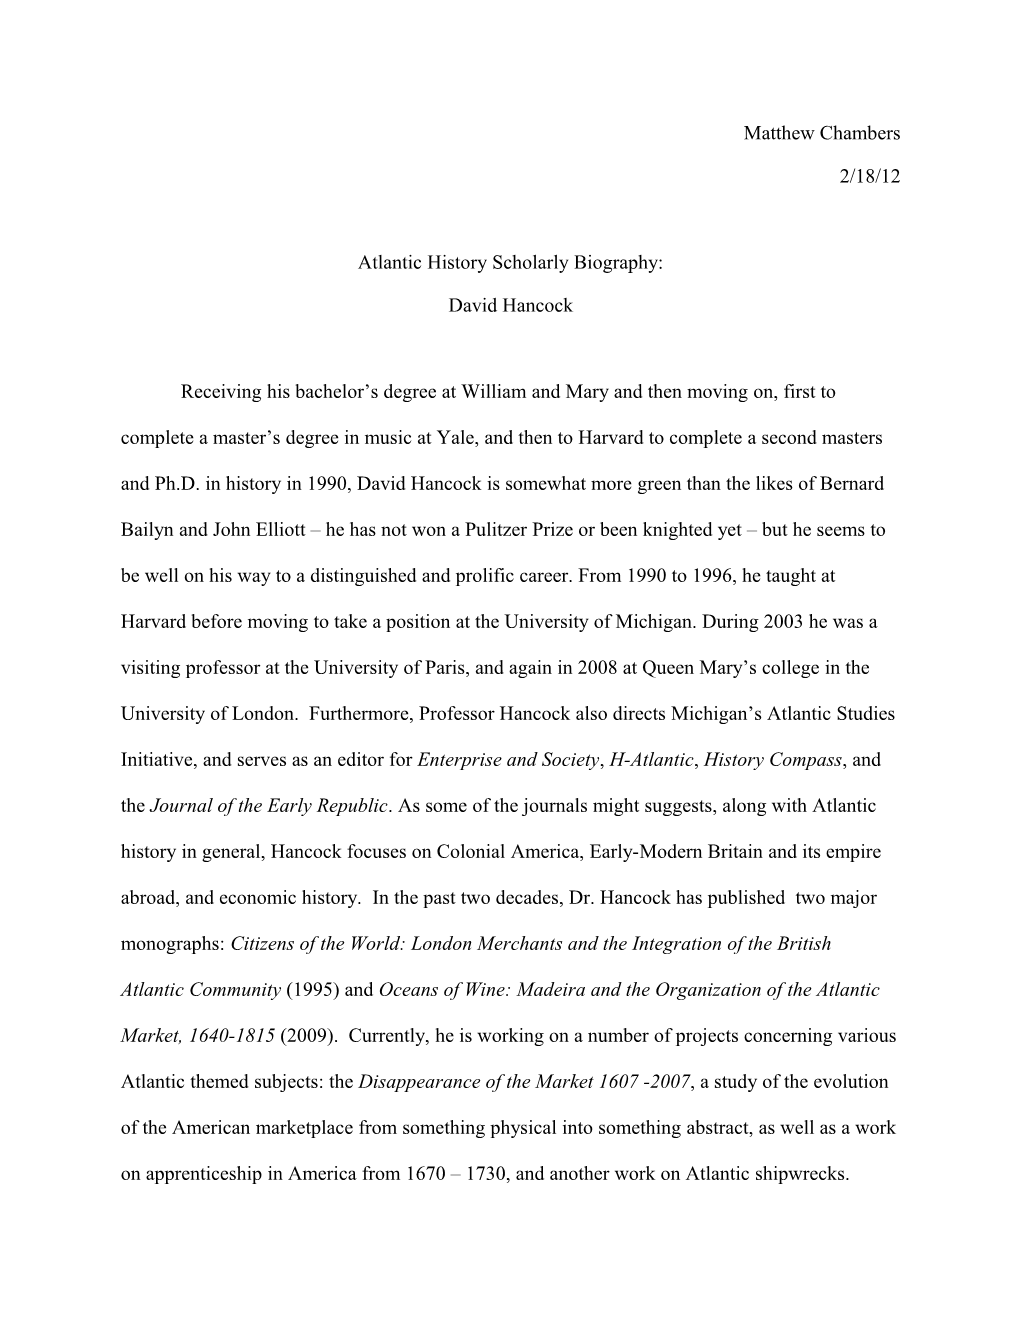 Atlantic History Scholarly Biography